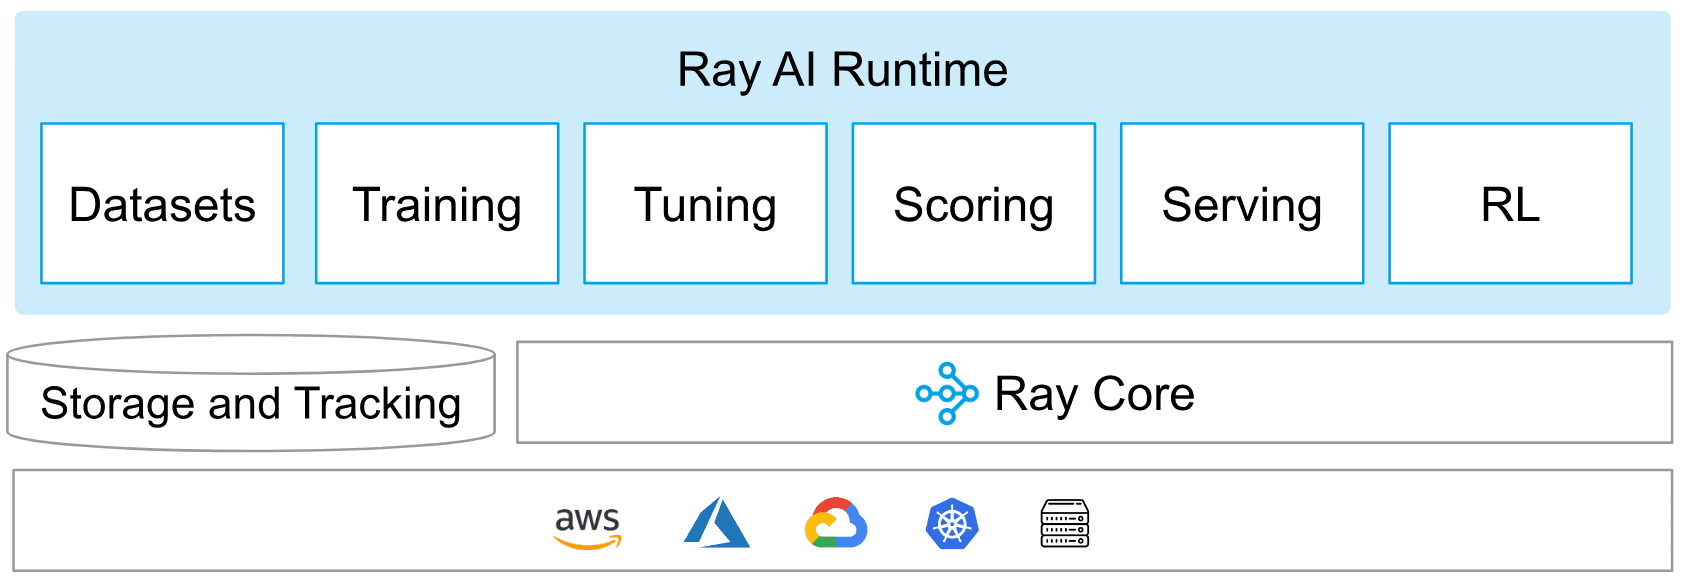 Ray AI Runtime (AIR)